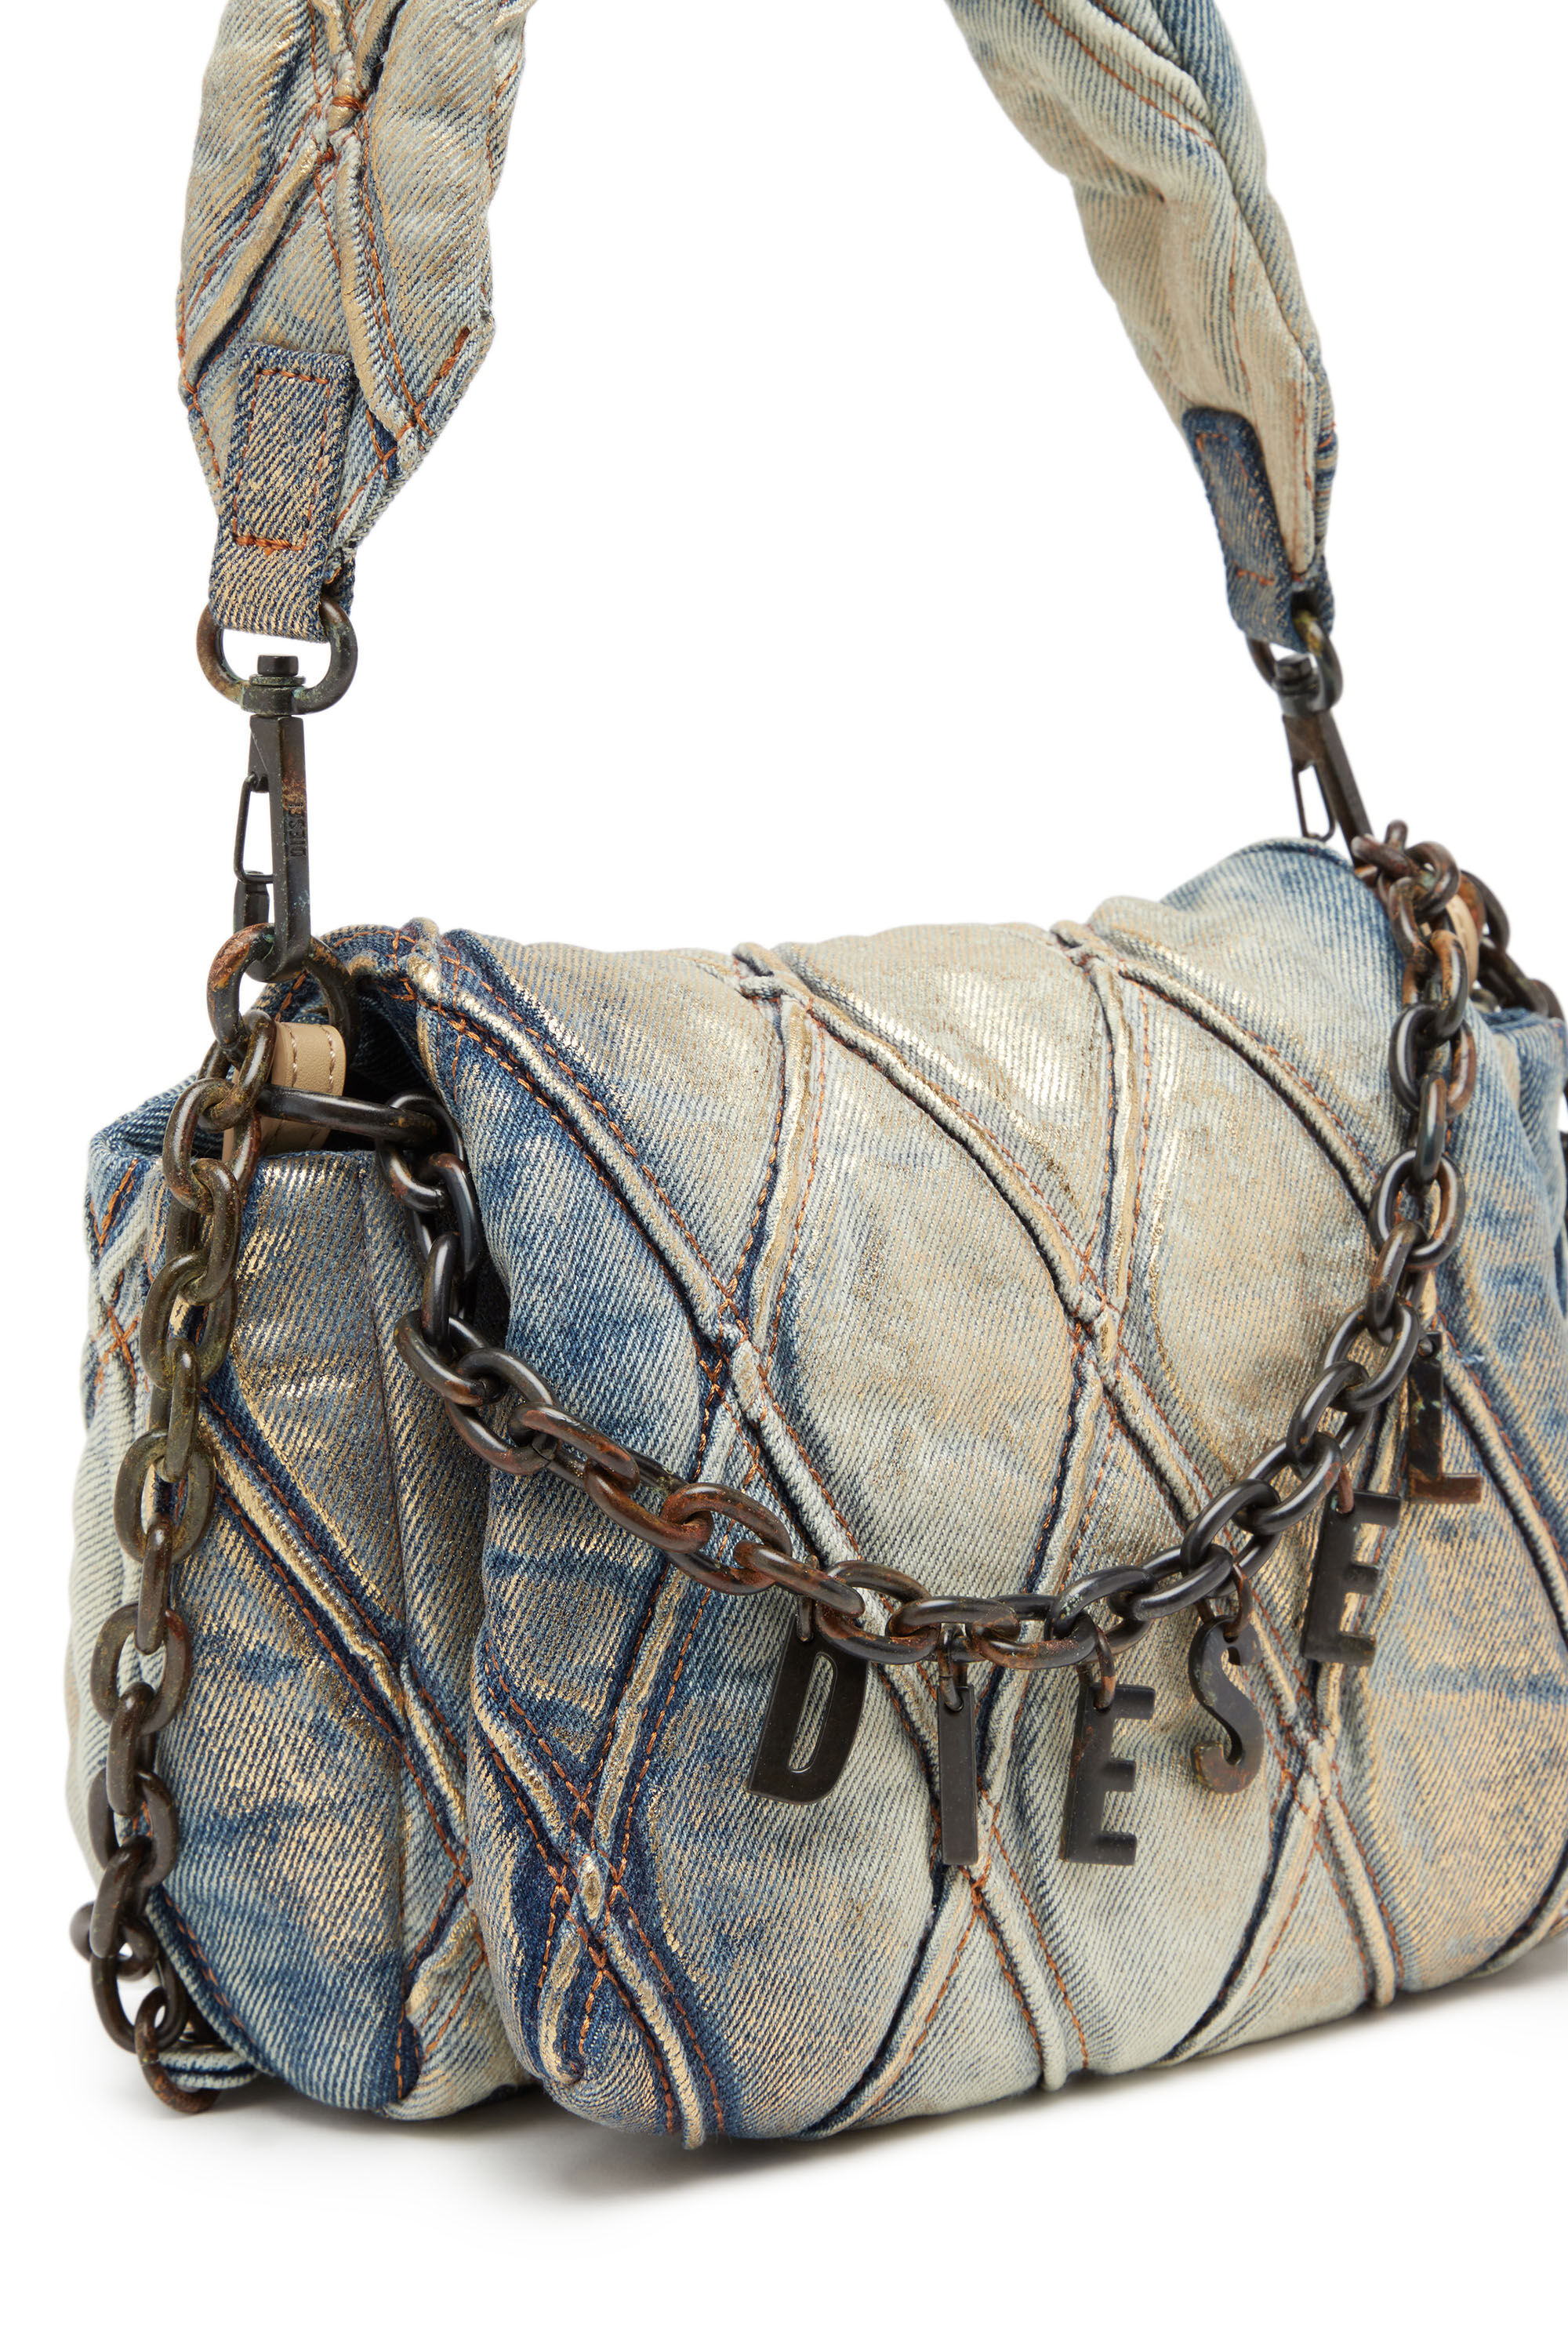 Women's Charm-D Shoulder S bag in metallic quilted Denim | Diesel